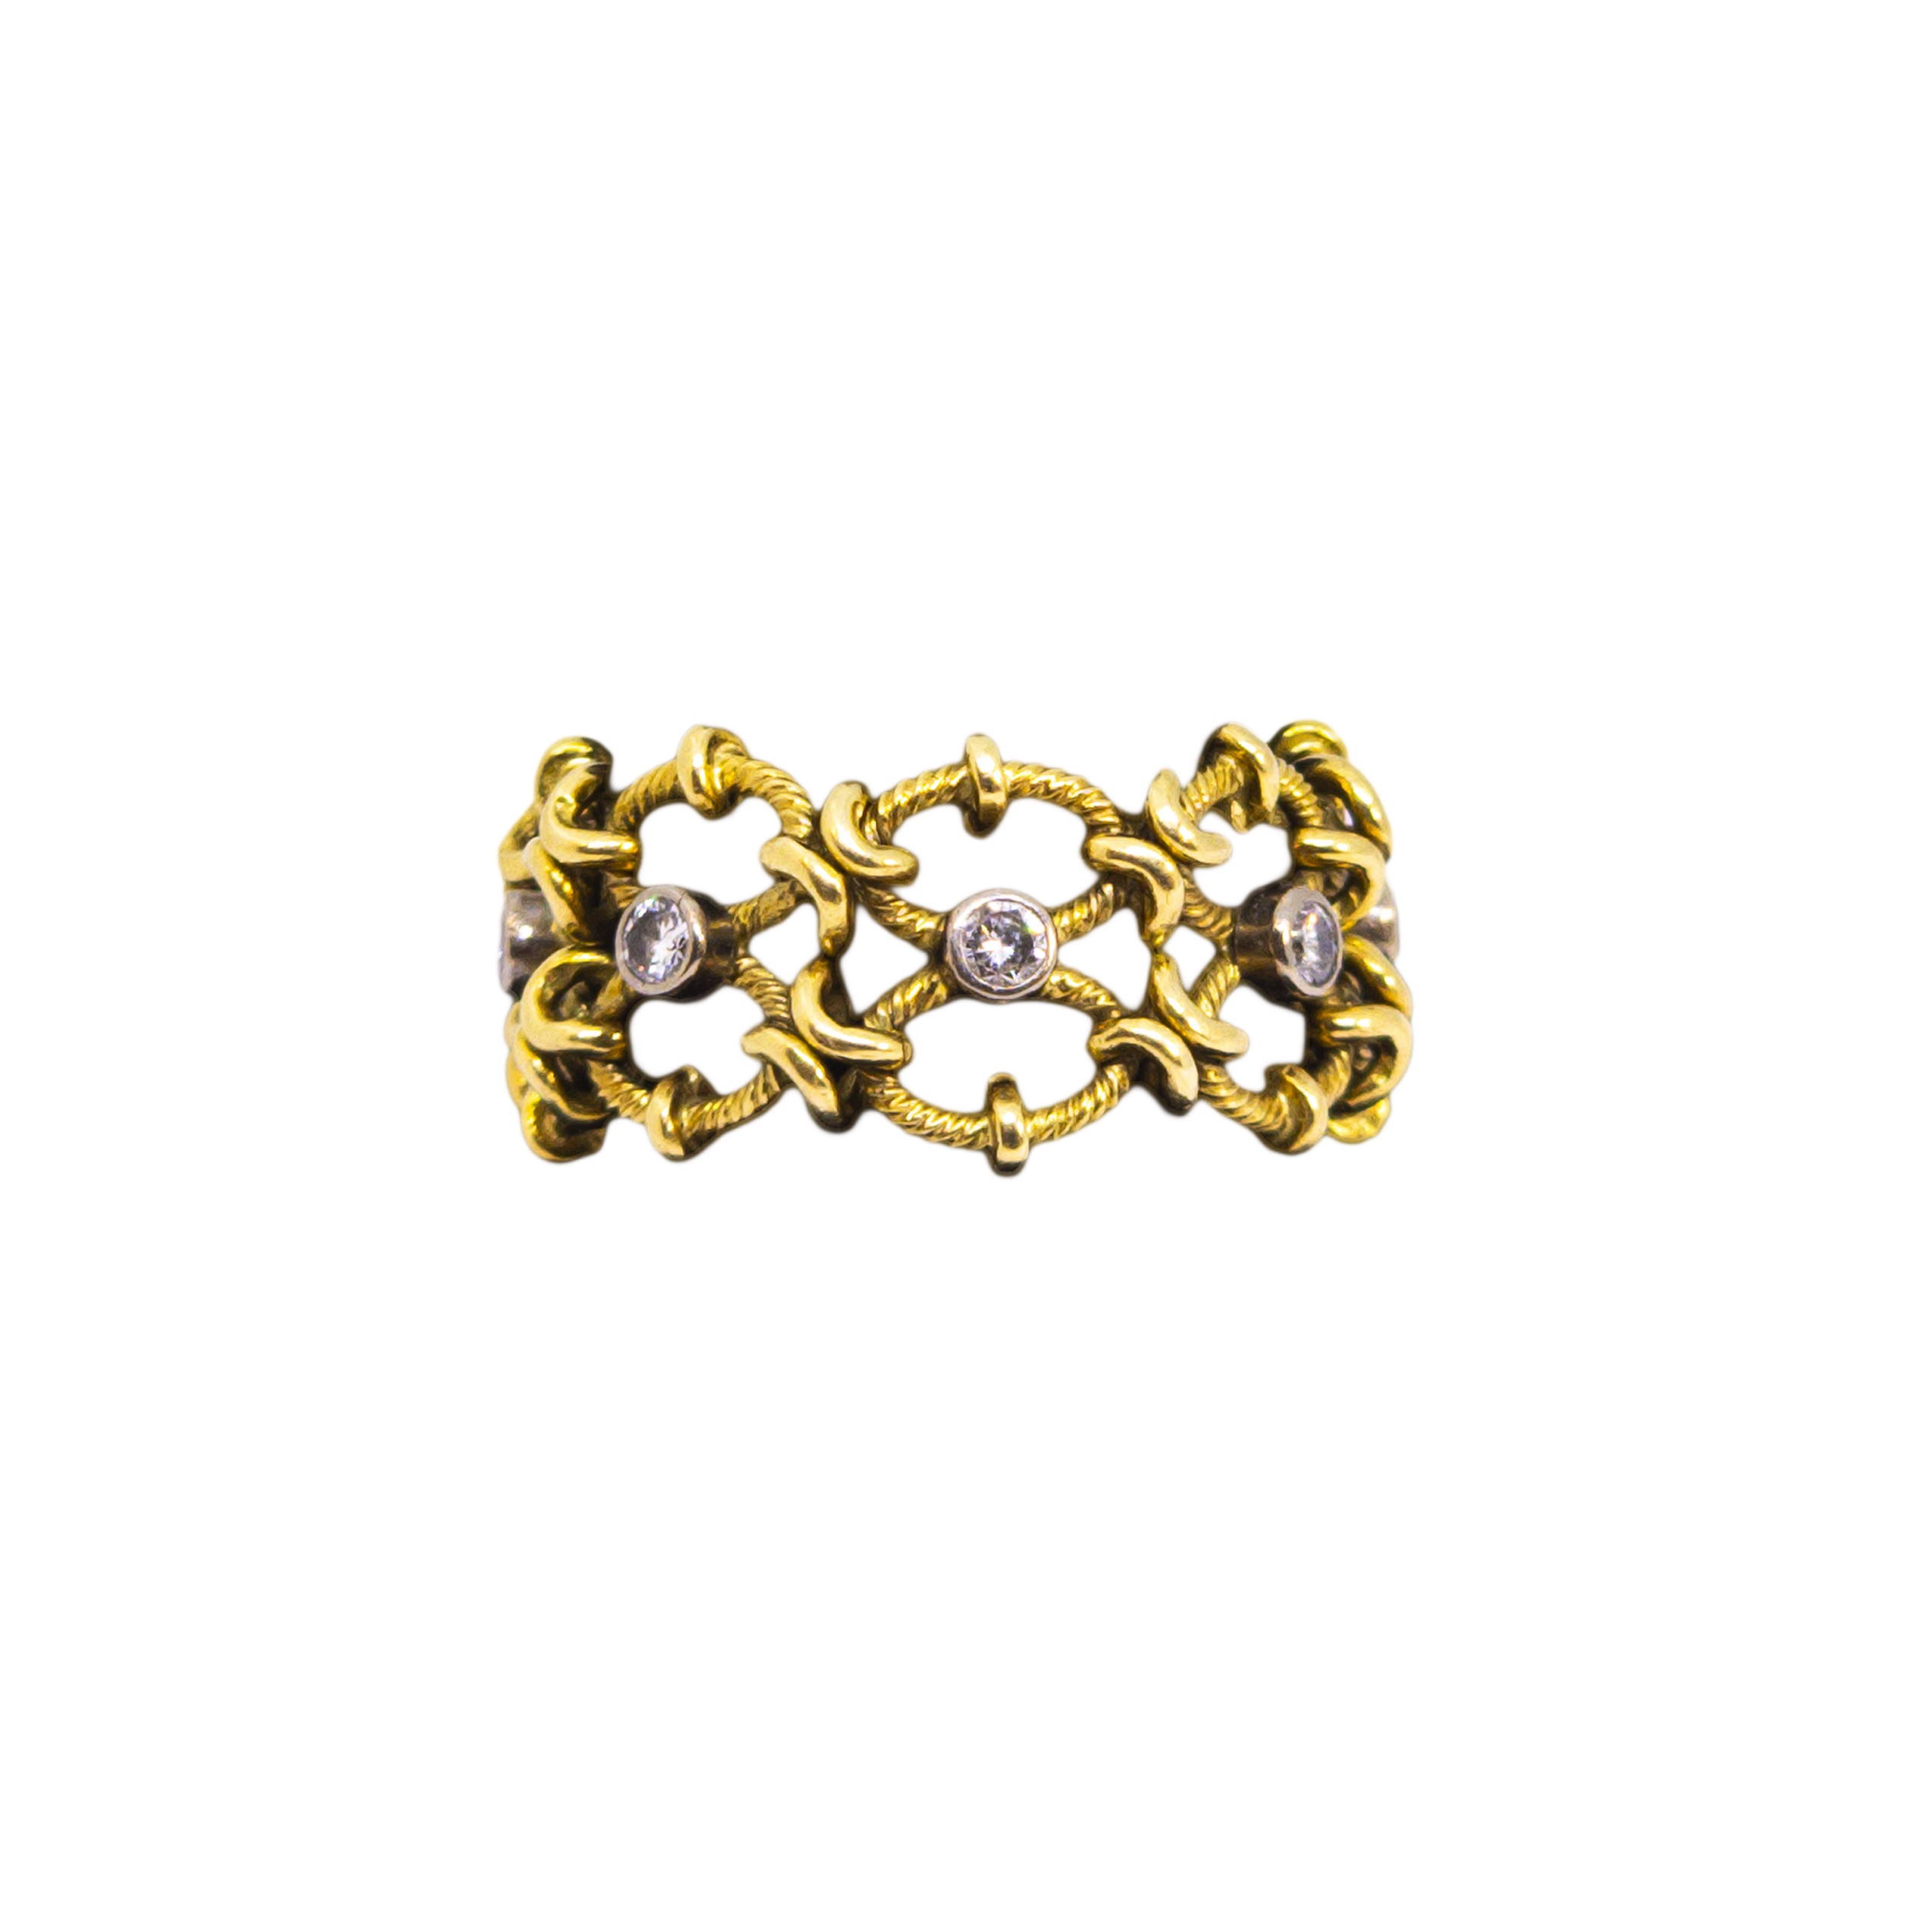 Cartier, Circa 1970, A diamond and 18 carat yellow gold 'Penelope' ring